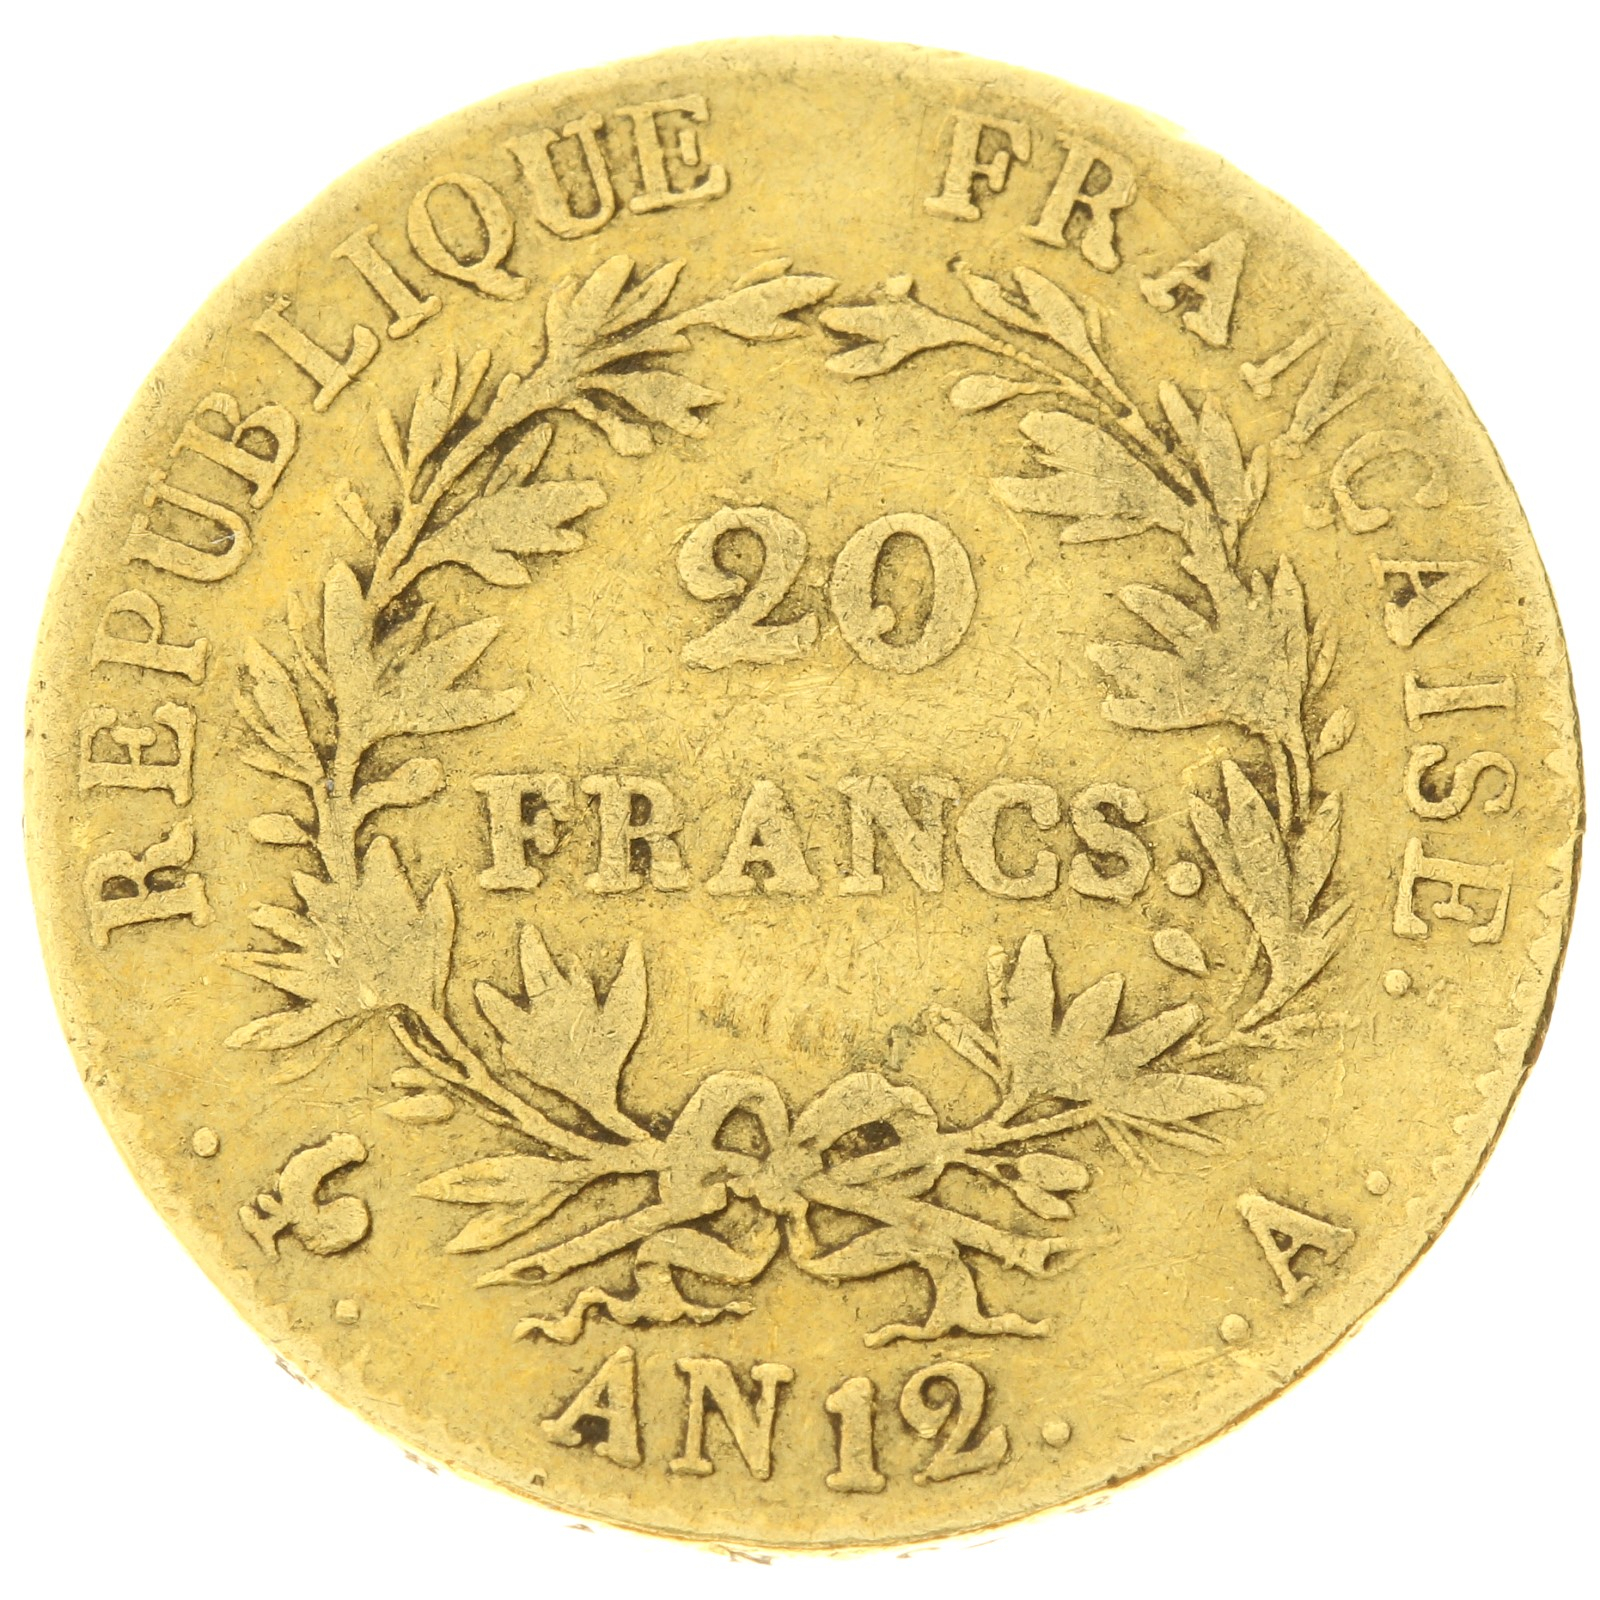 France - 20 francs - AN 12 (1802) - Napoleon I